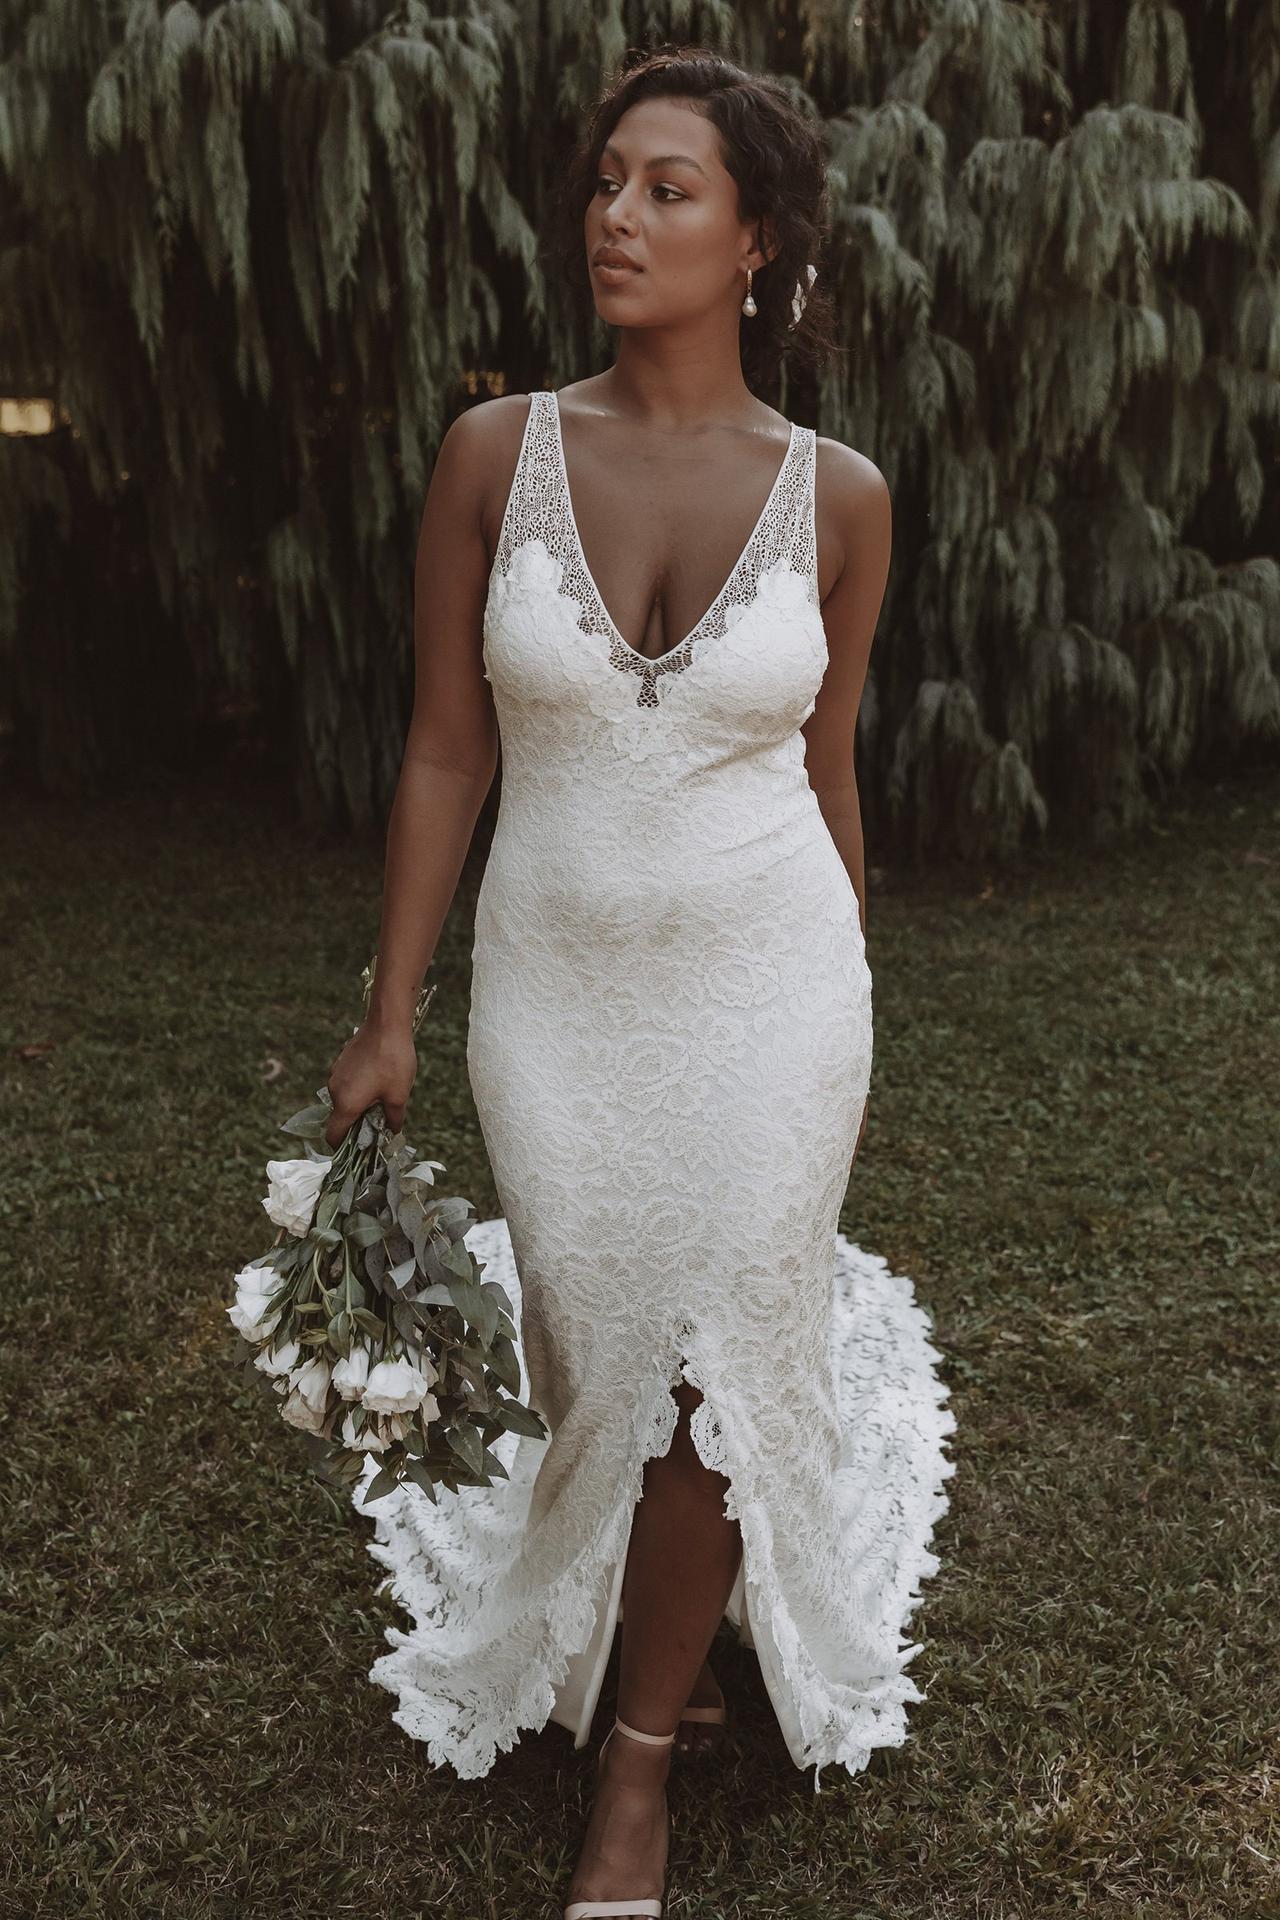 Big boobs in wedding dresses